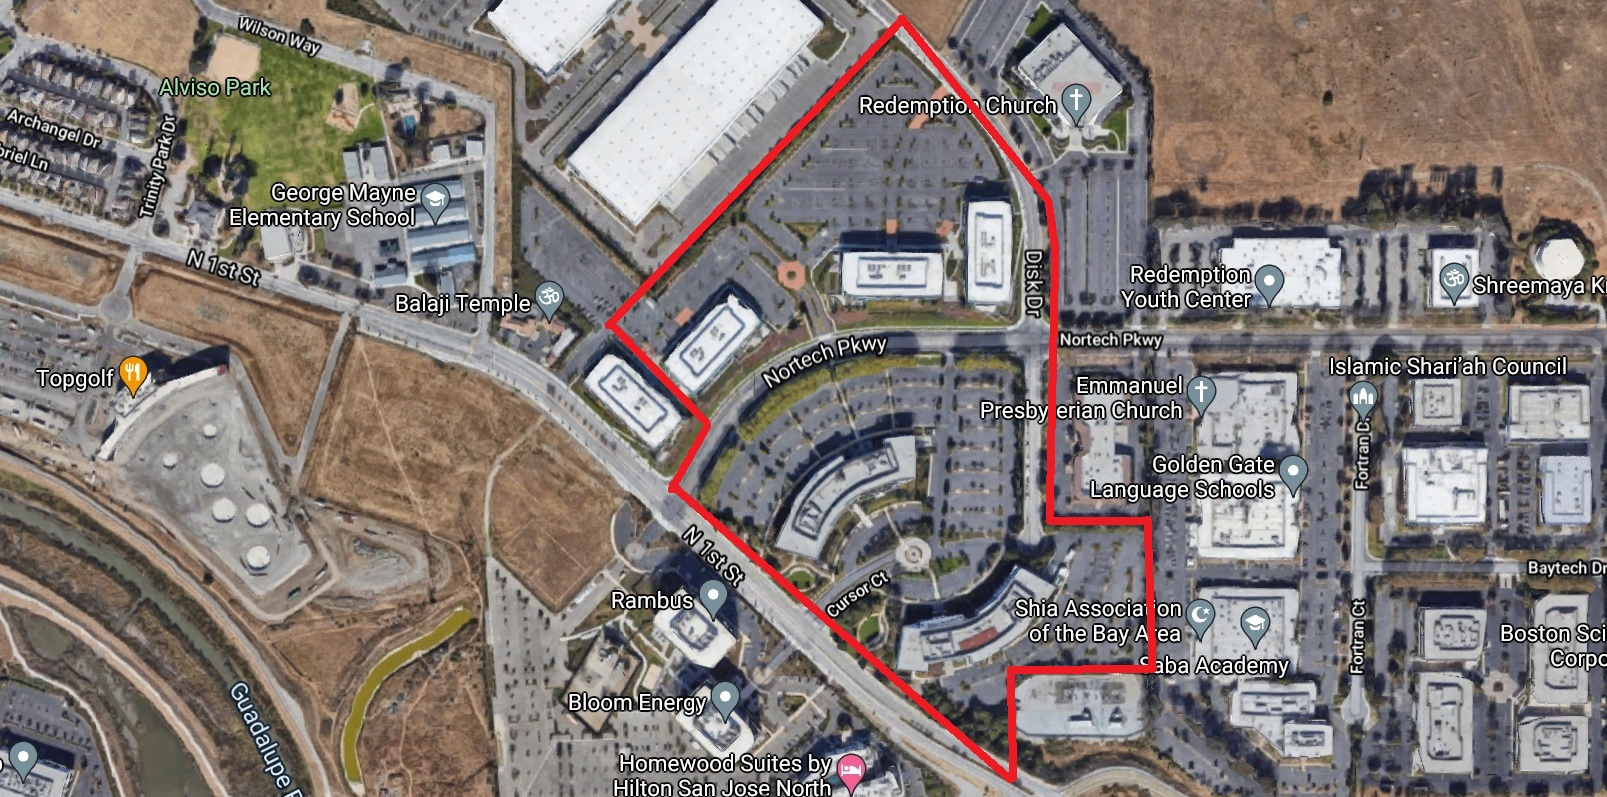 Google plans emerge for big north San Jose green campus